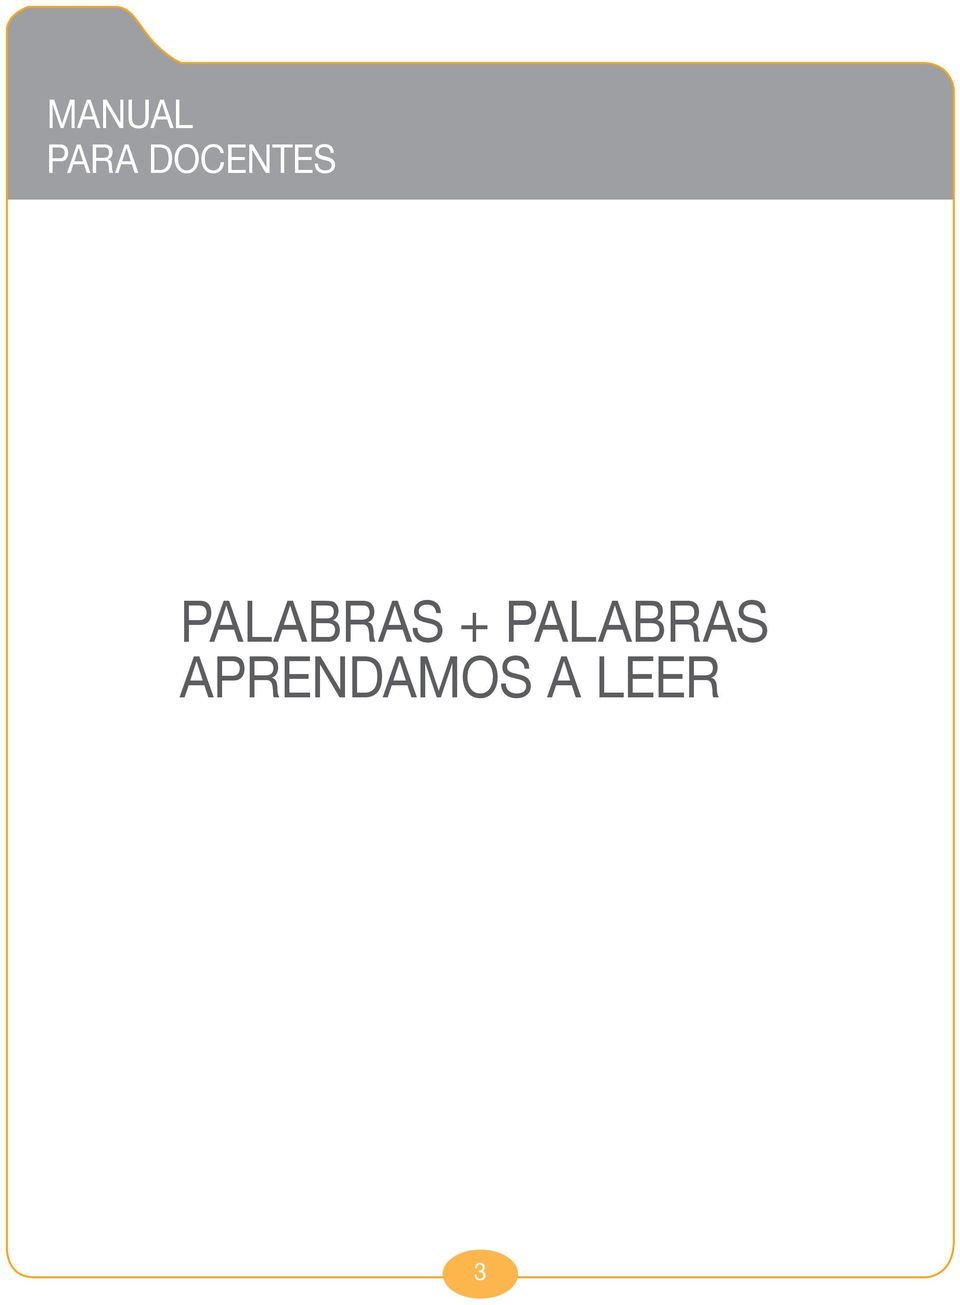 PALABRAS +